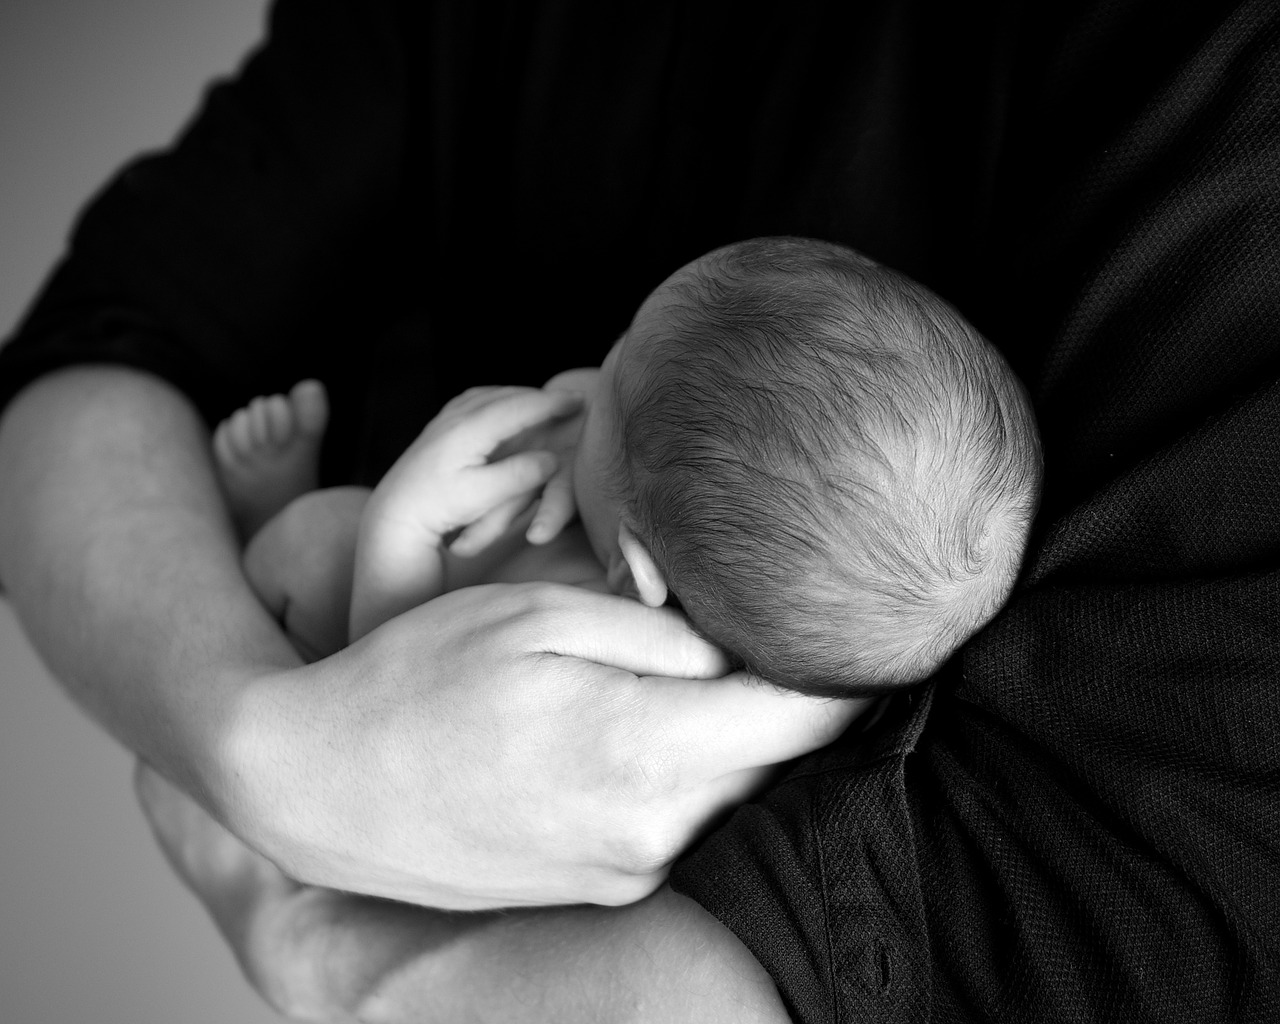 Image - baby child newborn arms